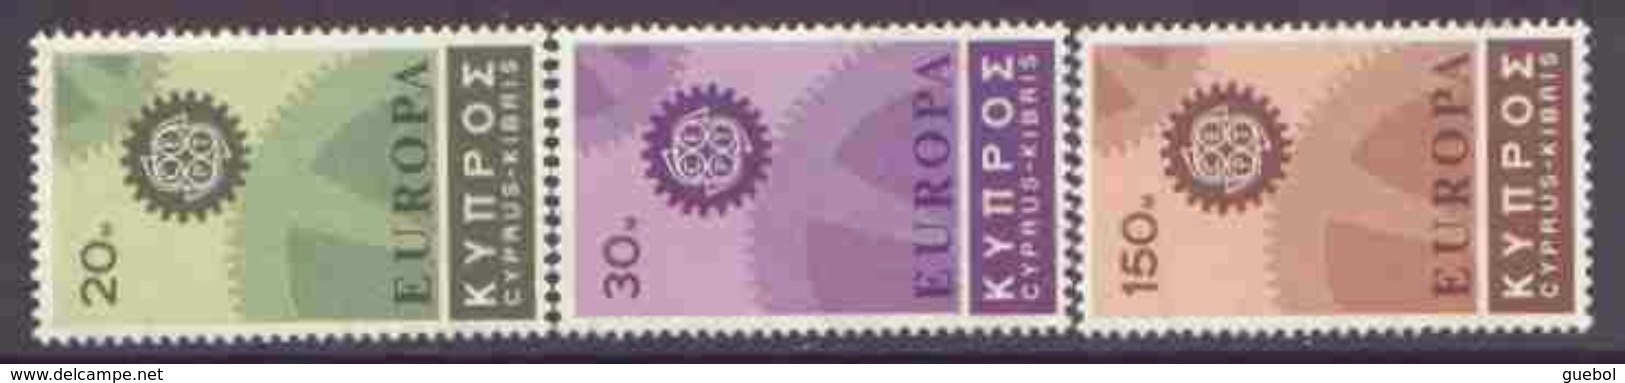 CEPT / Europa 1967 Chypre N° 284 à 286 ** Engrenage - 1967